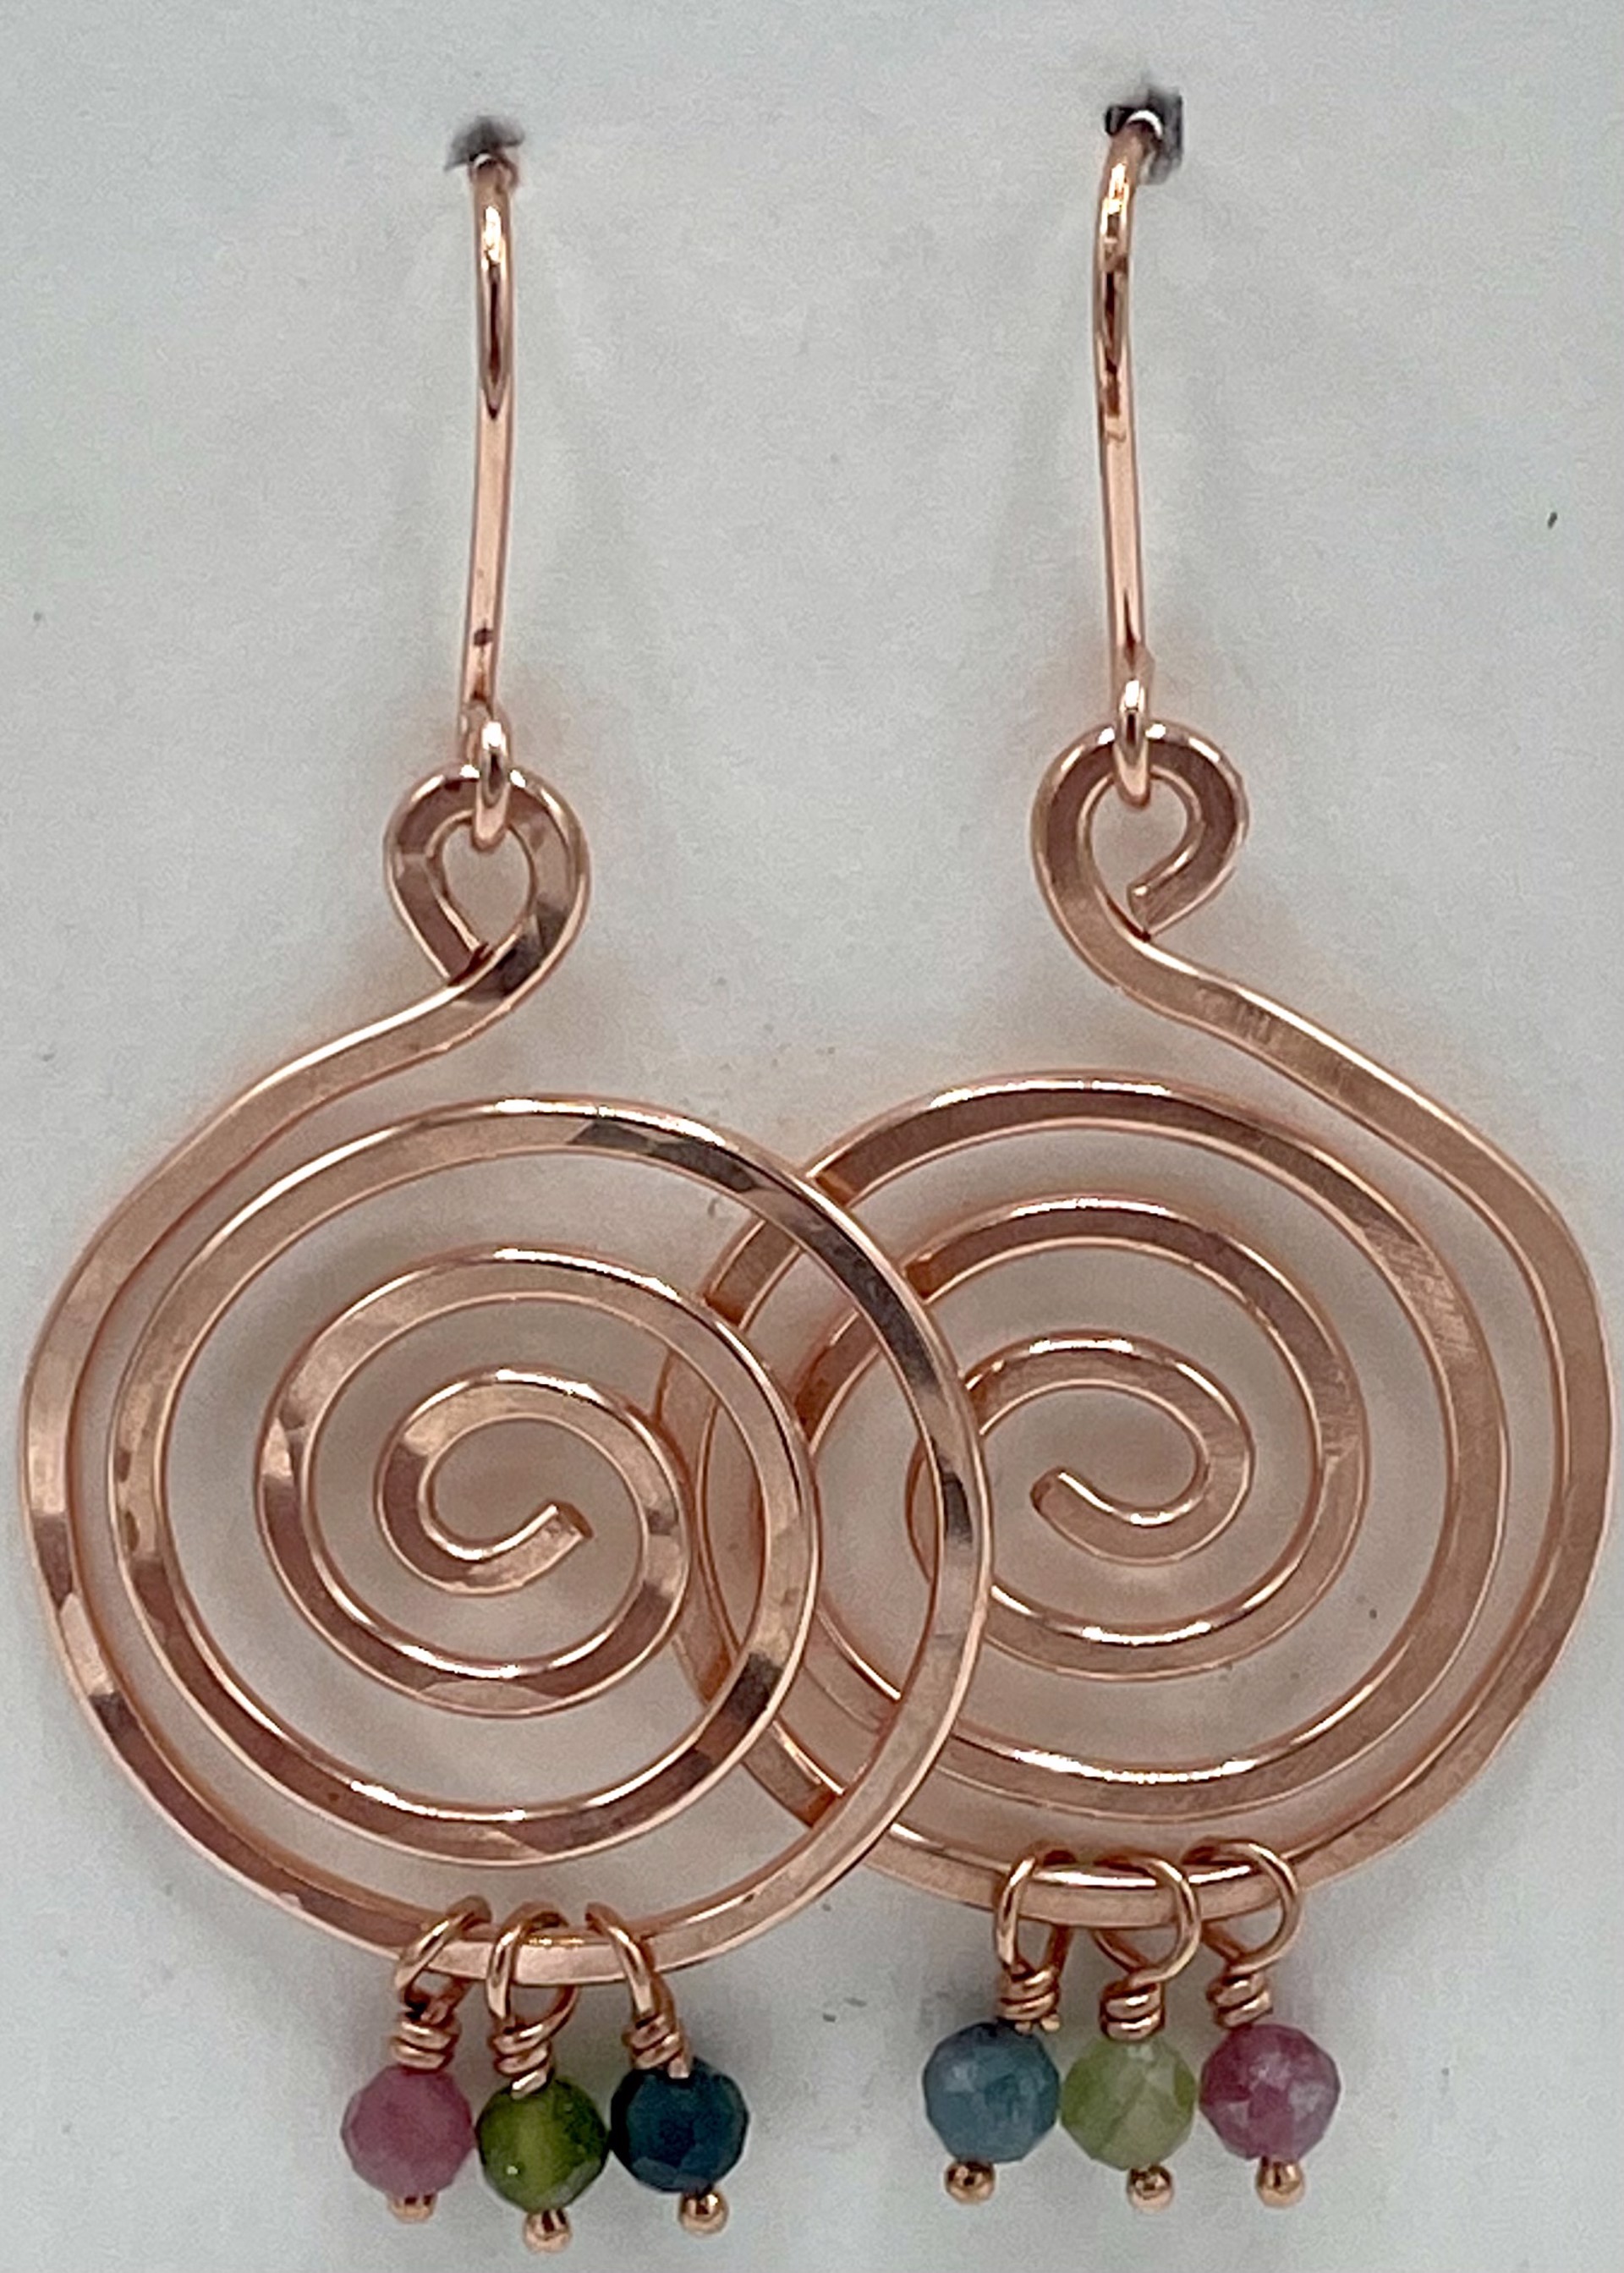 XL Spiral Copper with Tourmaline Earrings by Emelie Hebert